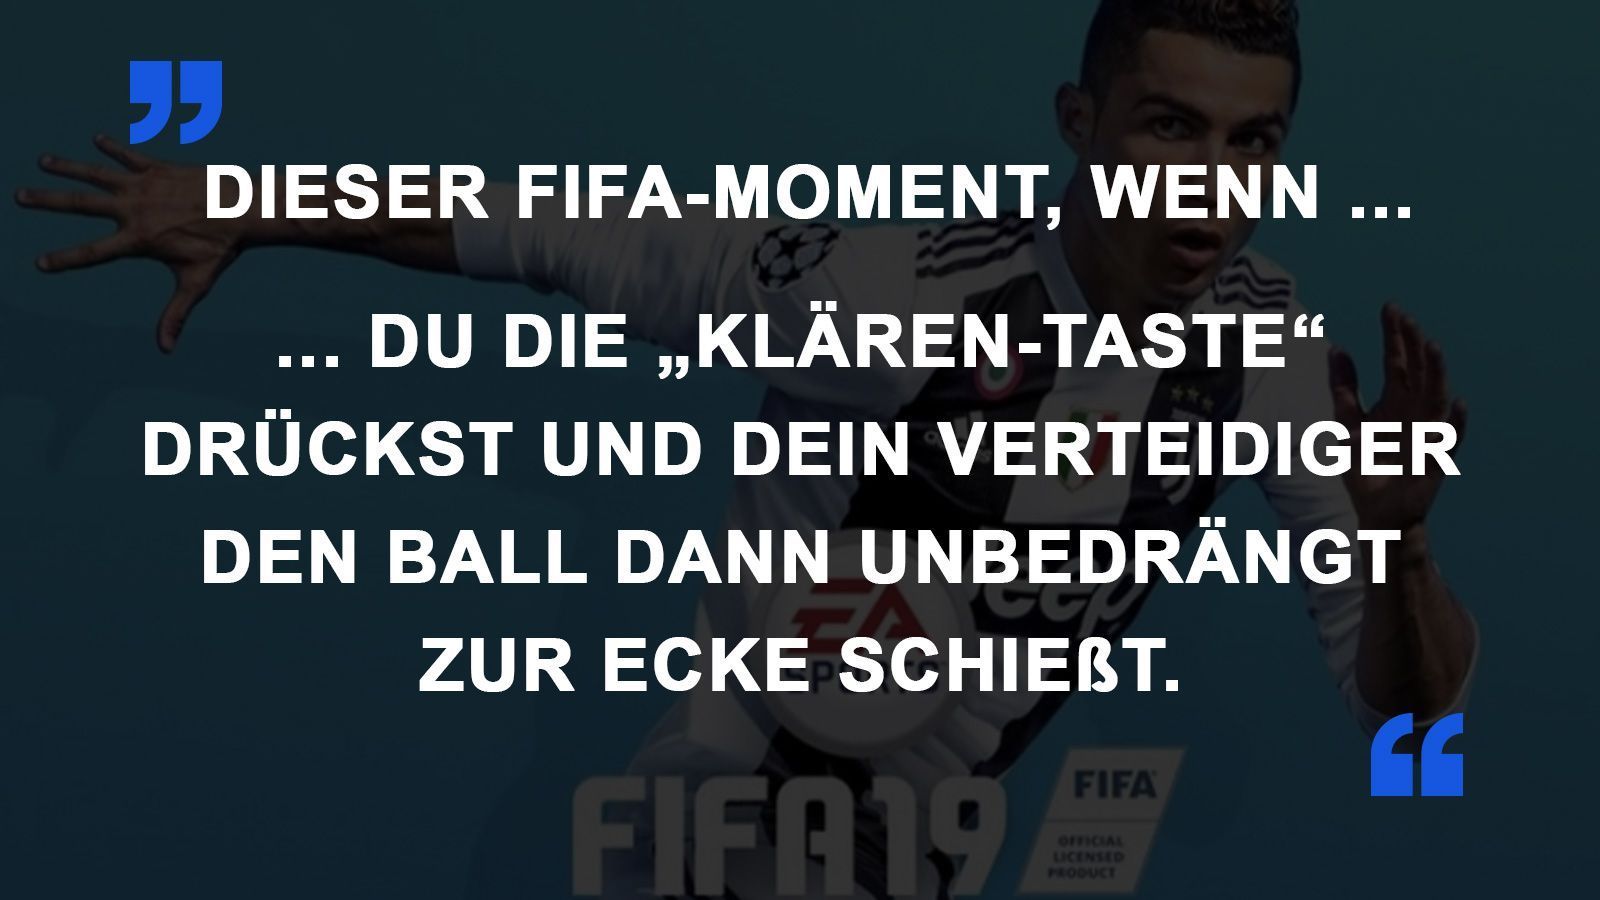 
                <strong>FIFA Momente klären</strong><br>
                
              